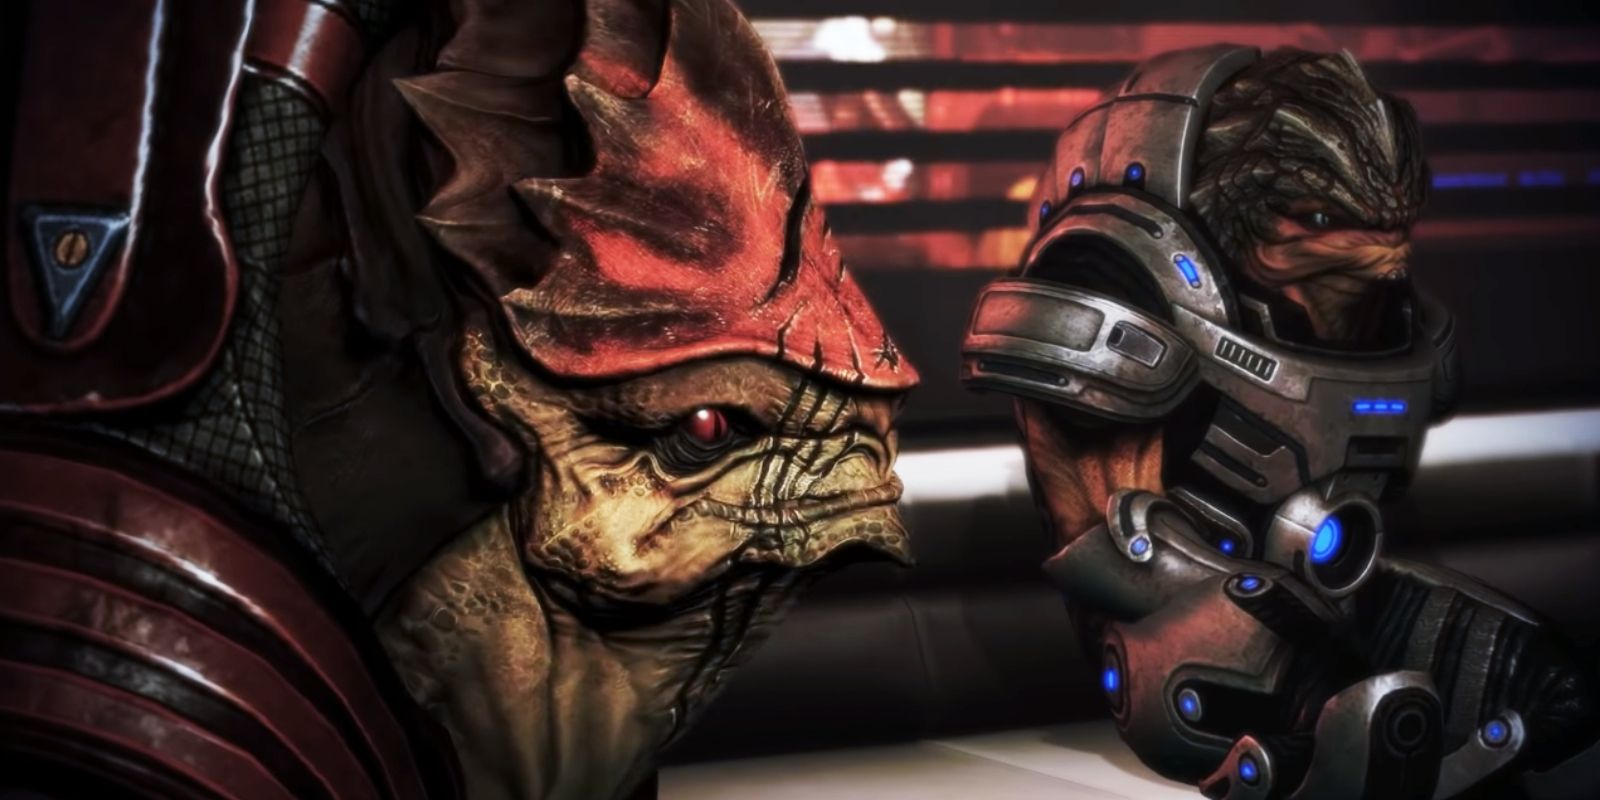 Wrex or Grunt: Which Mass Effect Krogan Is The Better Companion